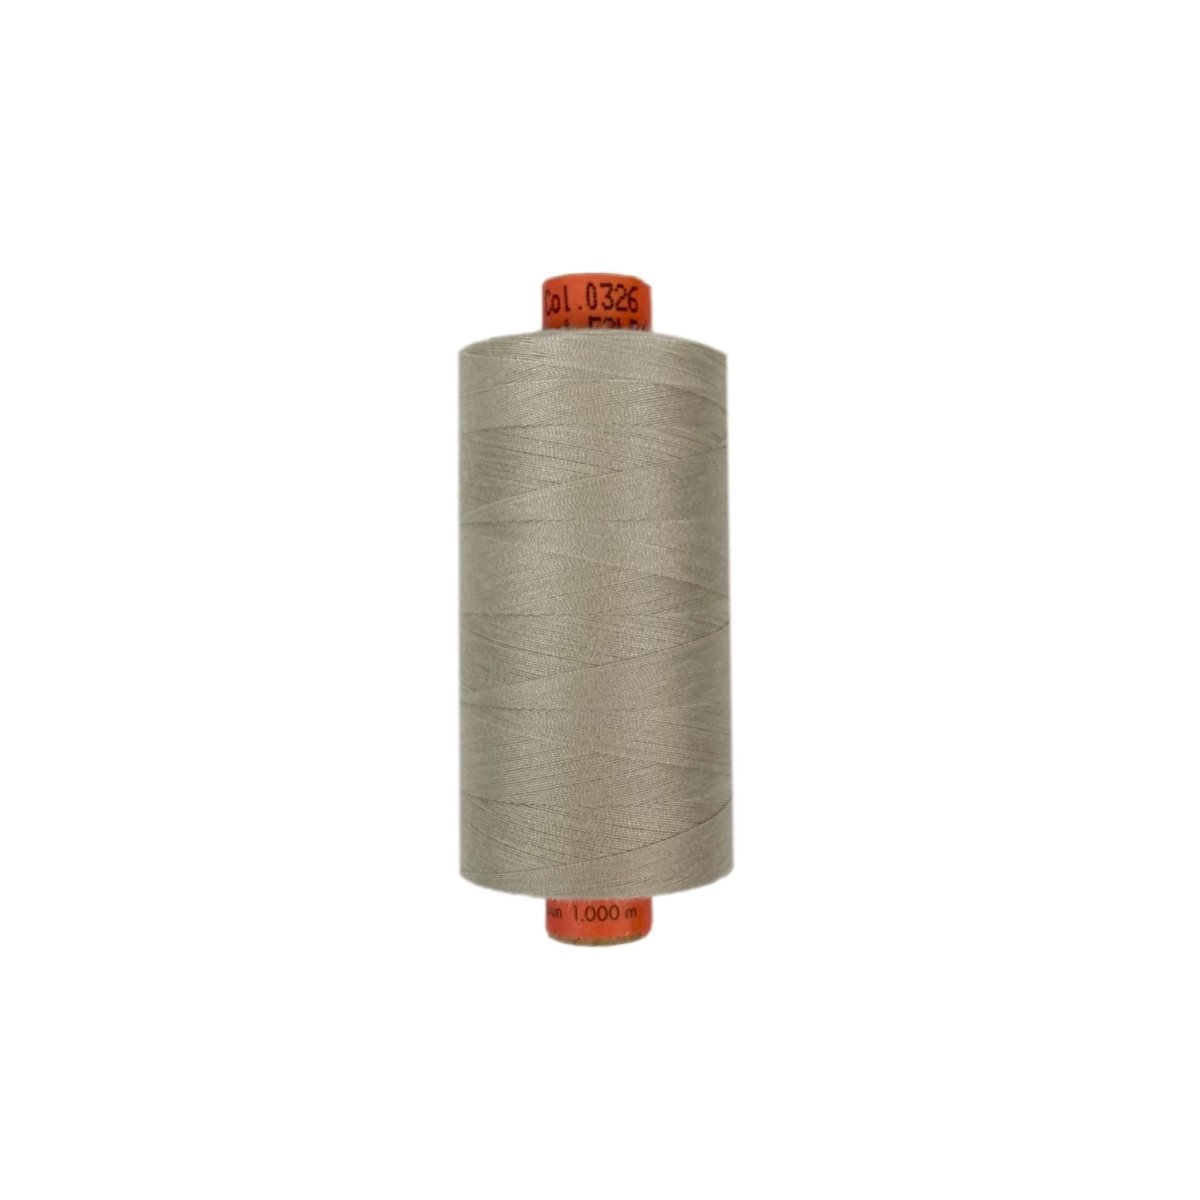 Rasant Thread - 1000m - Very Light Mocha Brown 0326 - Sewing Gem